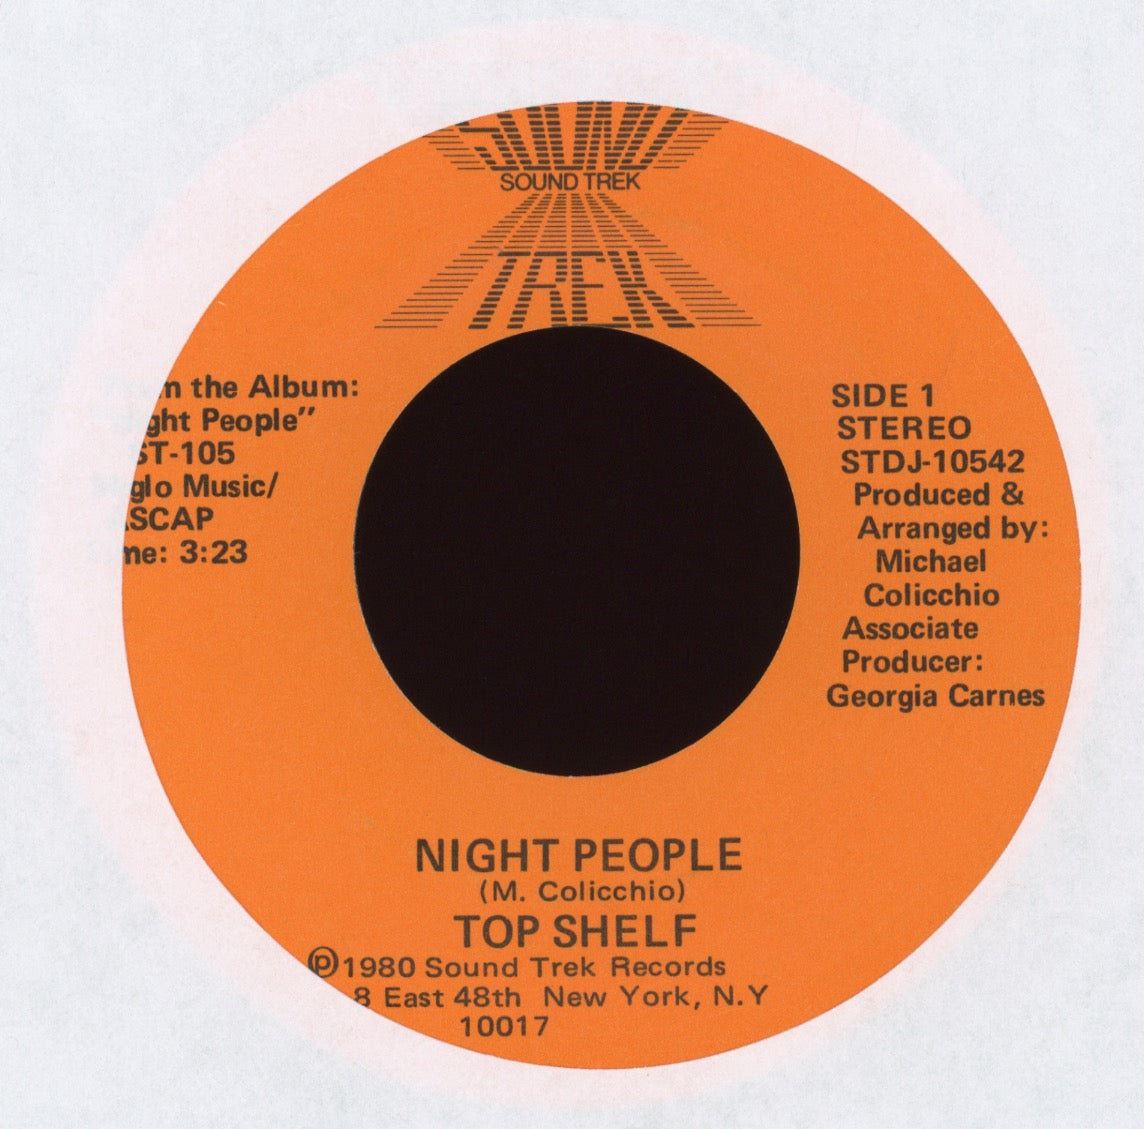 Top Shelf - Night People on Sound Trek Modern Soul 45